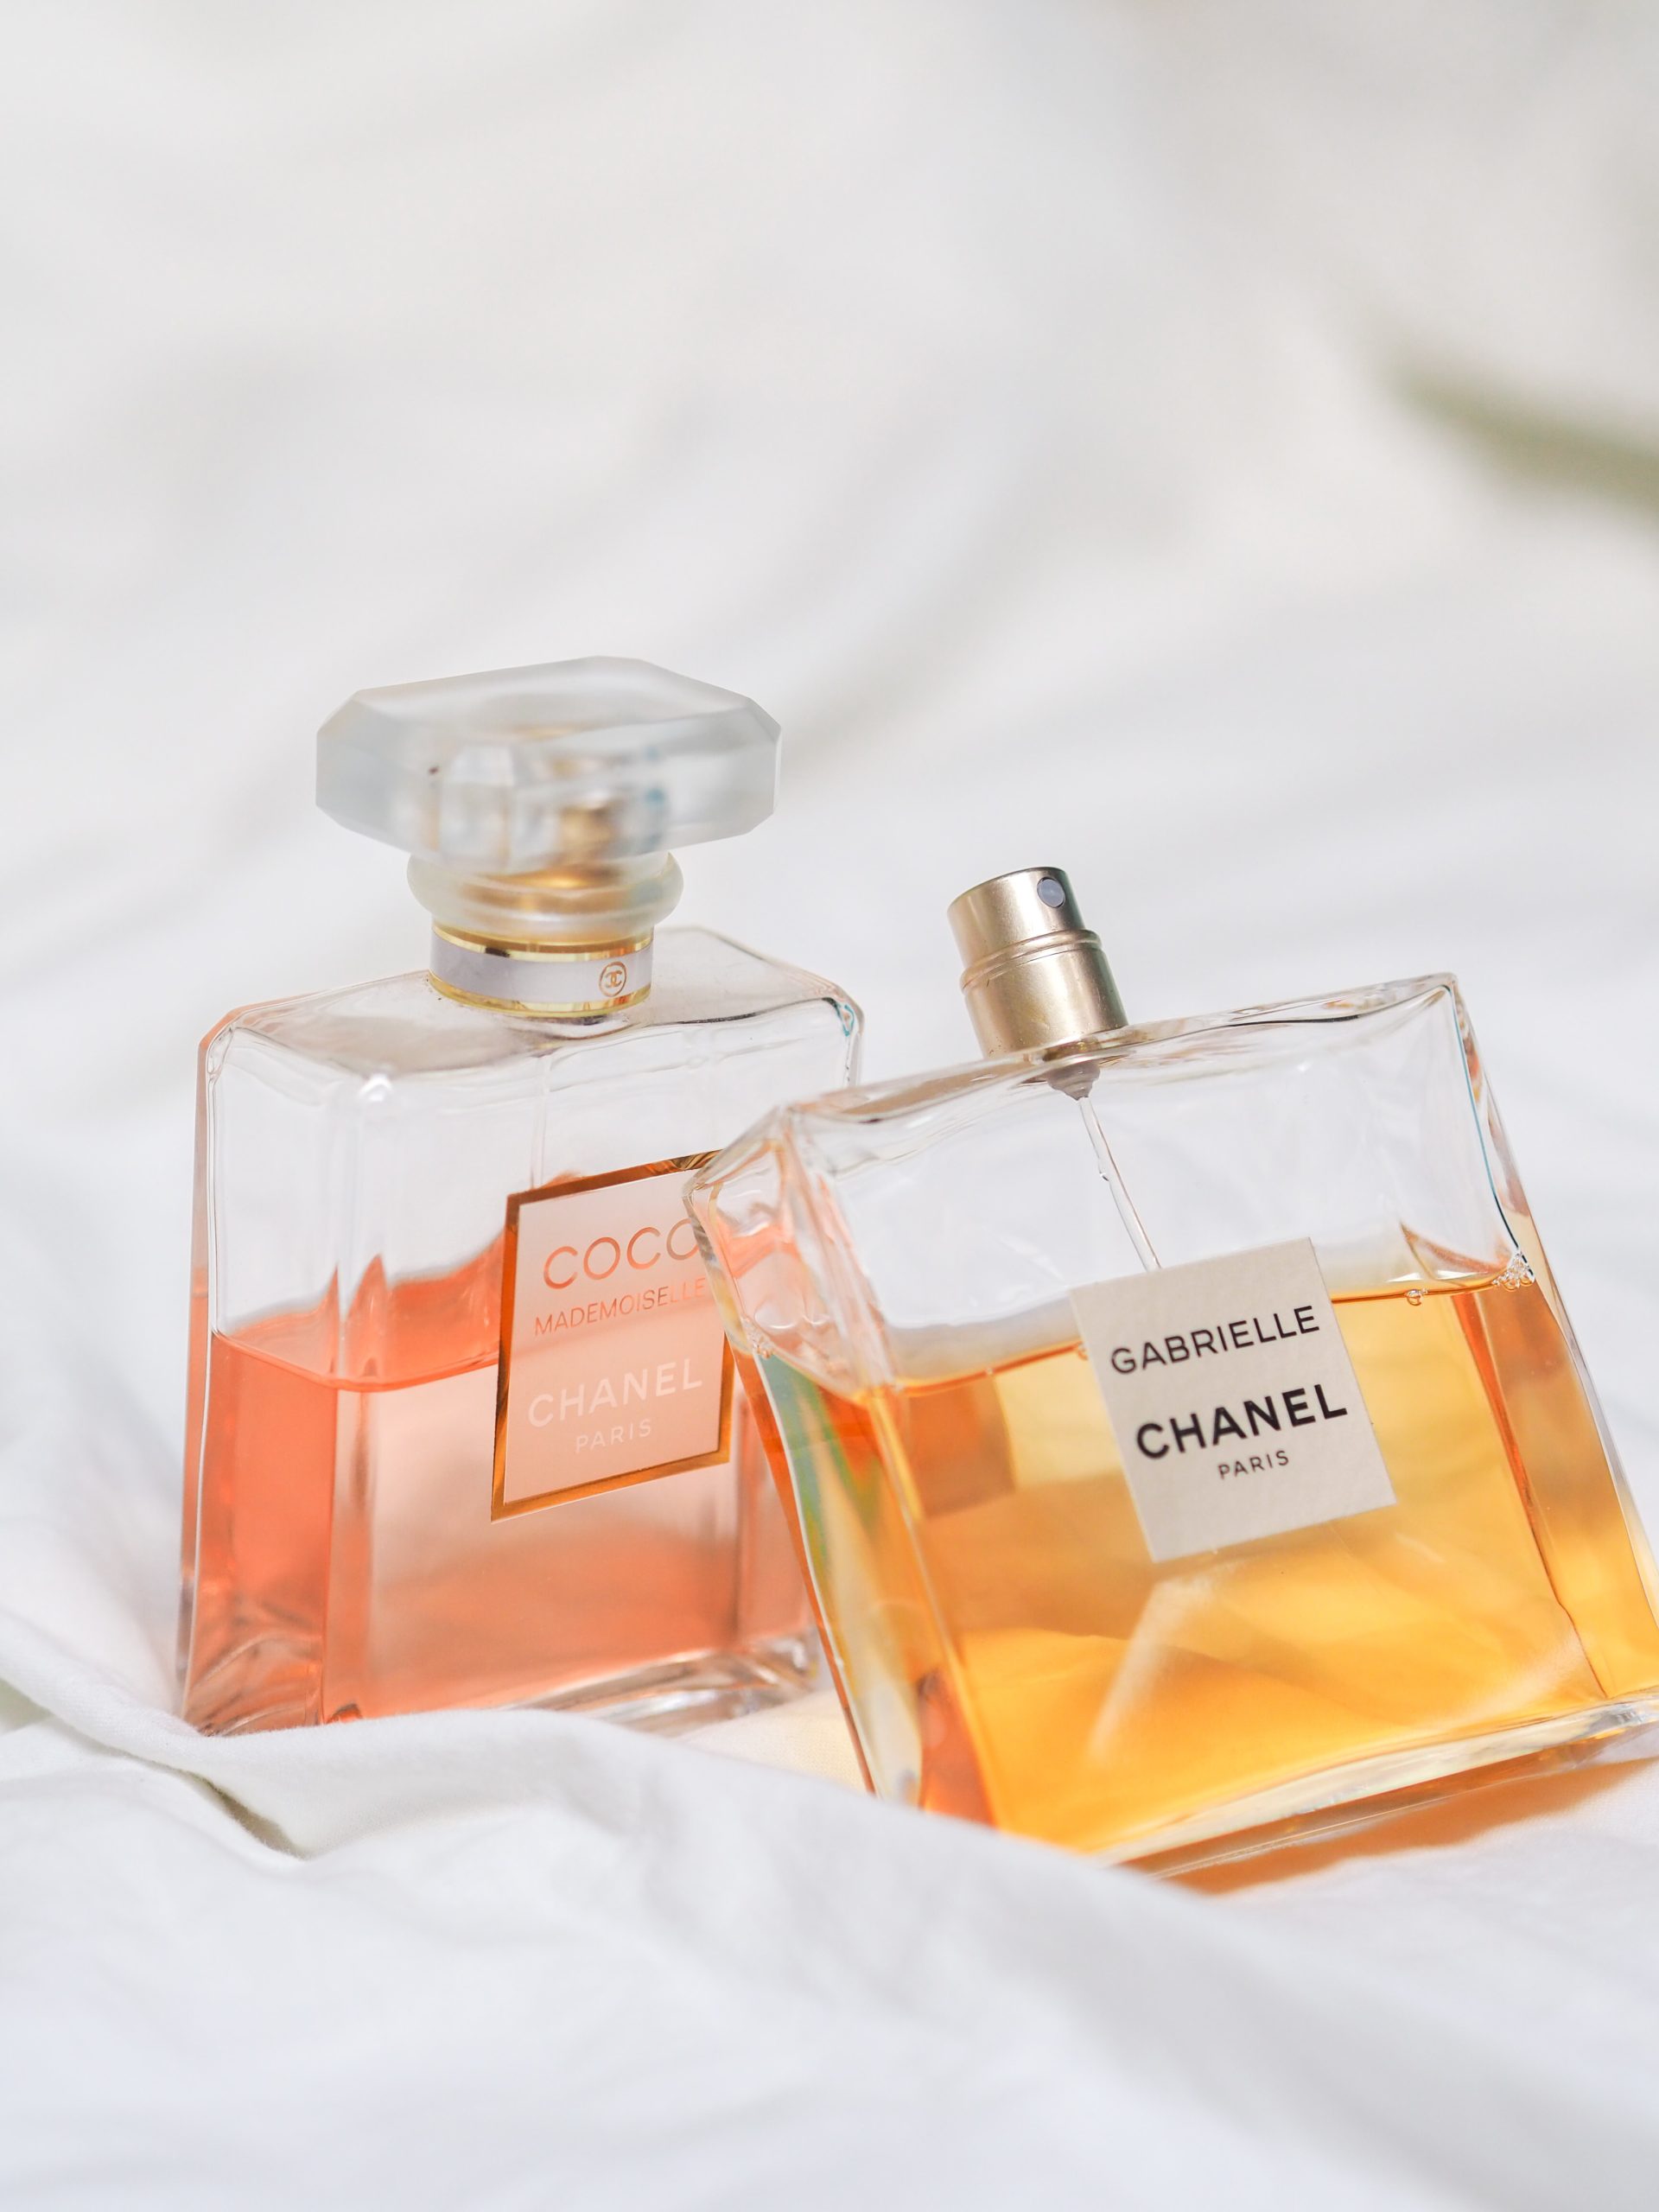 LVMH Perfumes & Cosmetics 9-Month Revenue Declines 25%